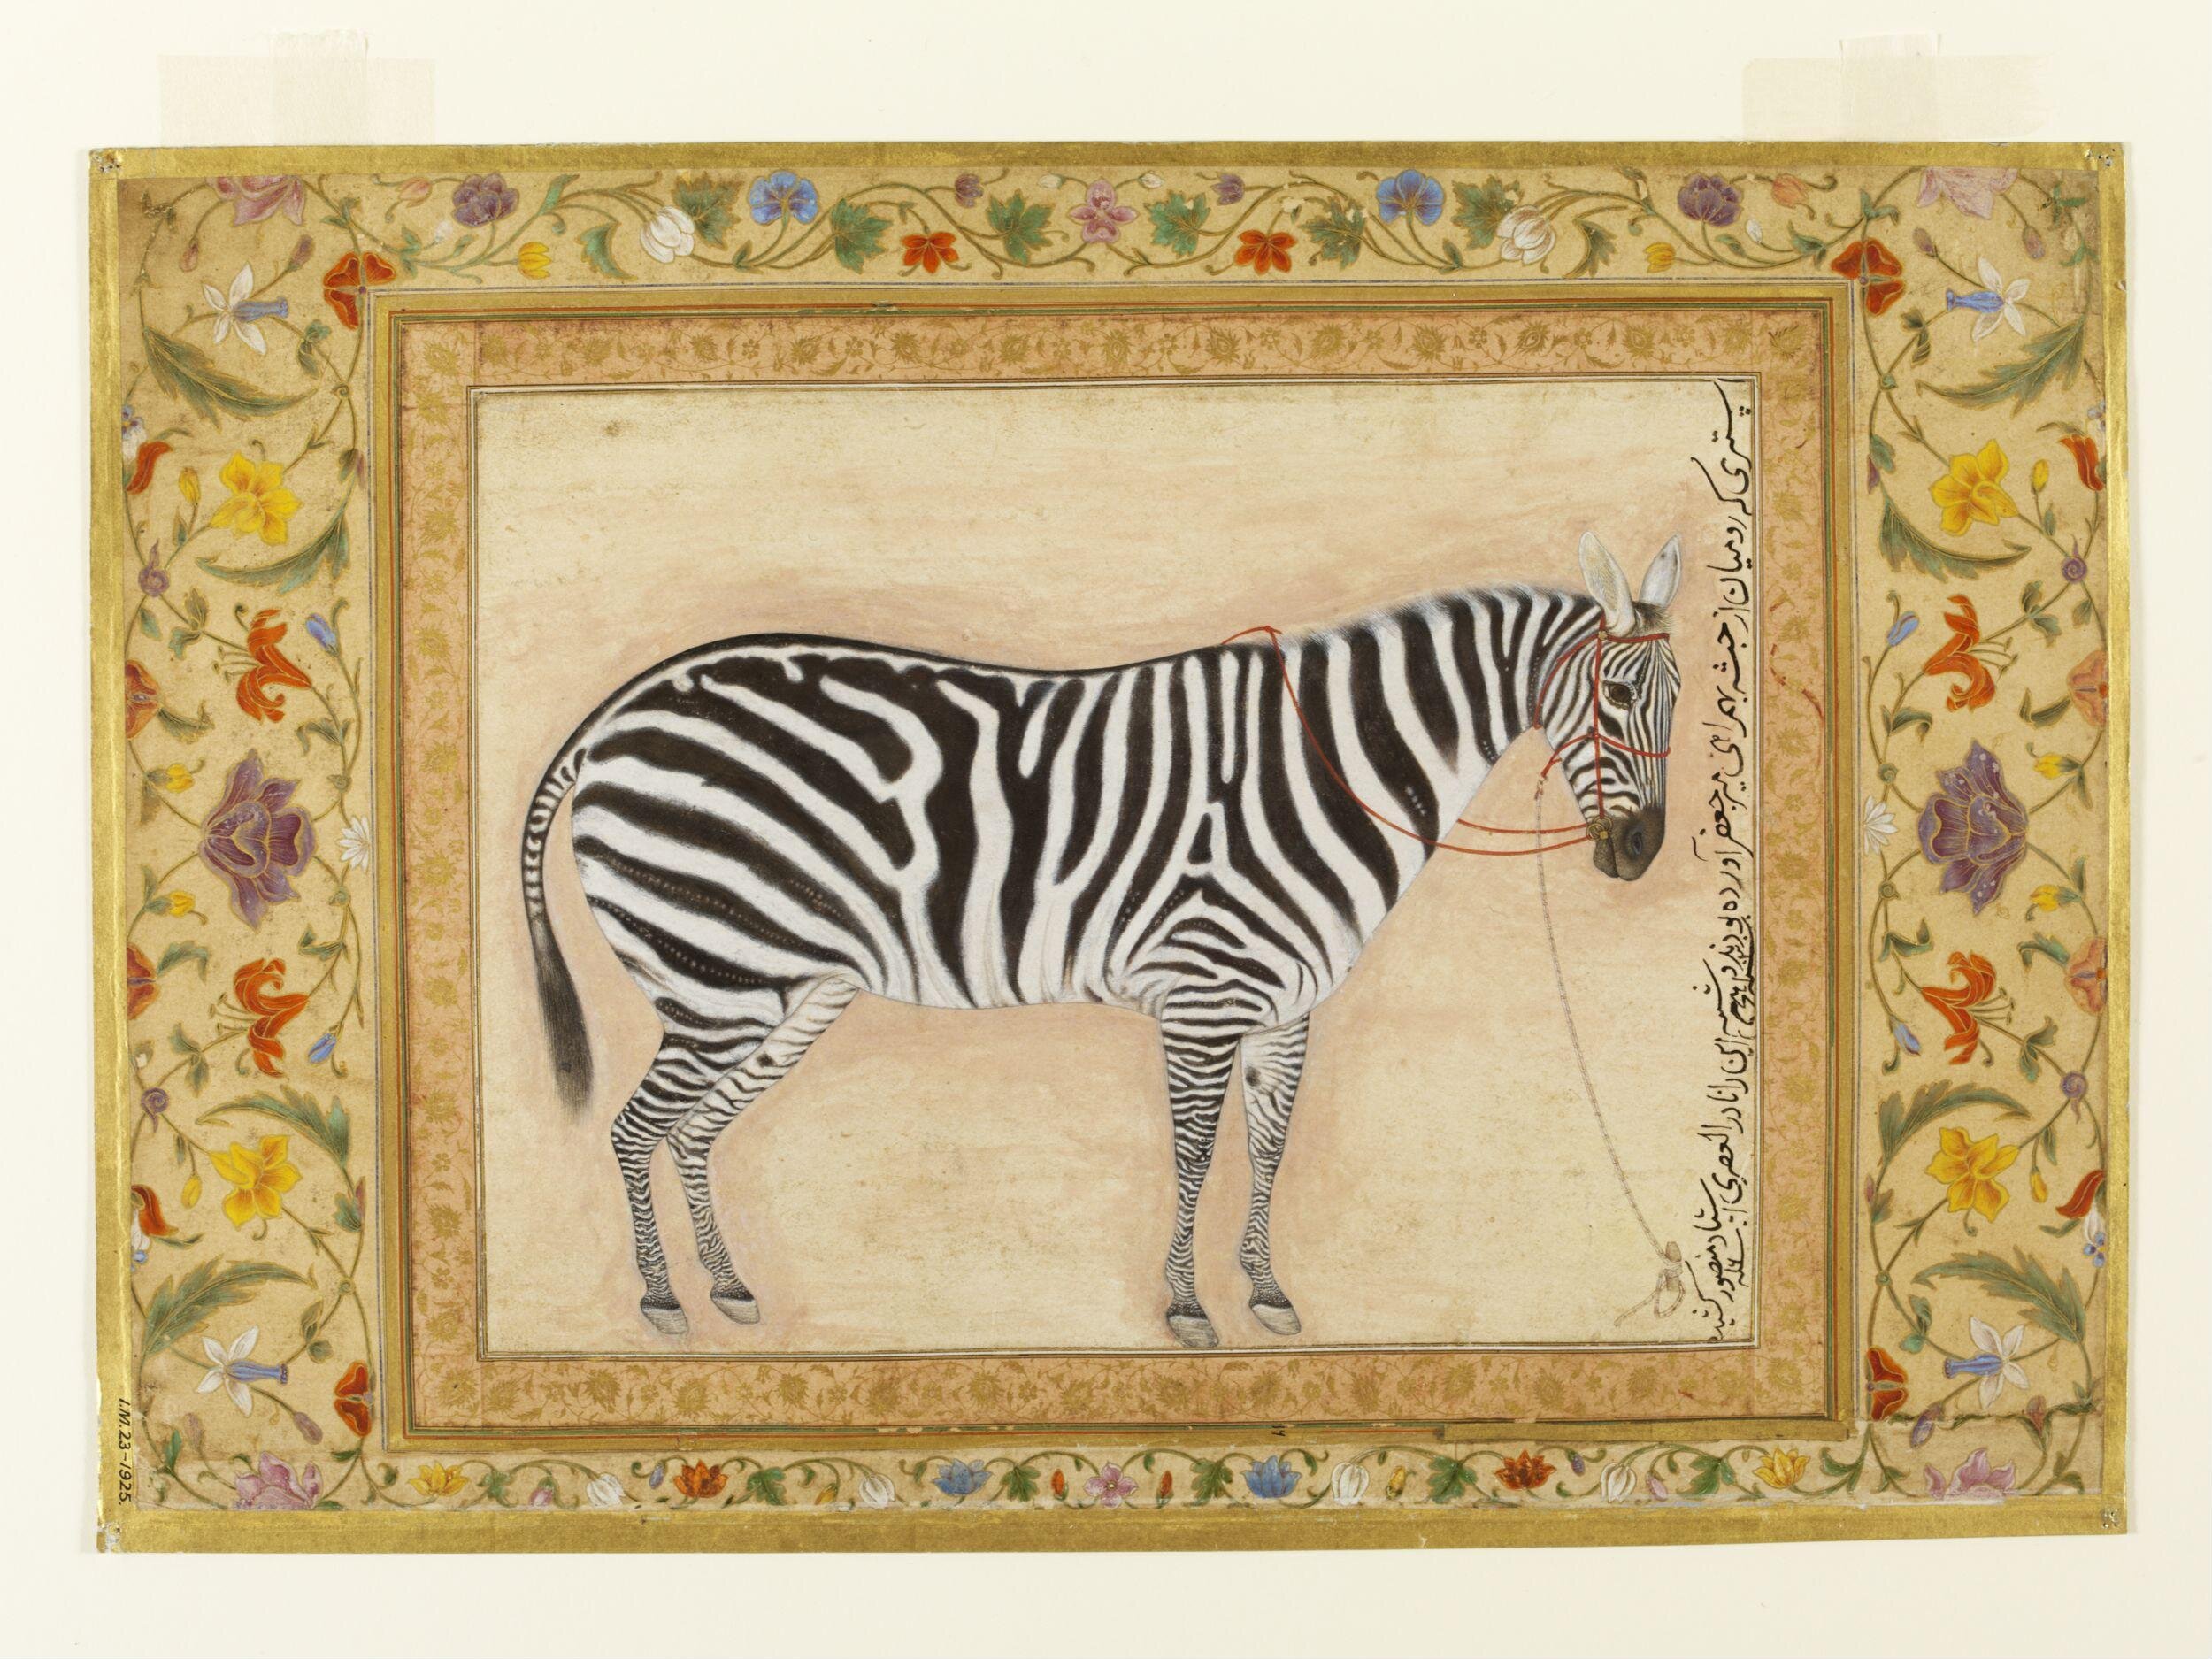 斑馬 by Ustad Mansur - 1621 - 38.7 x 24cm 